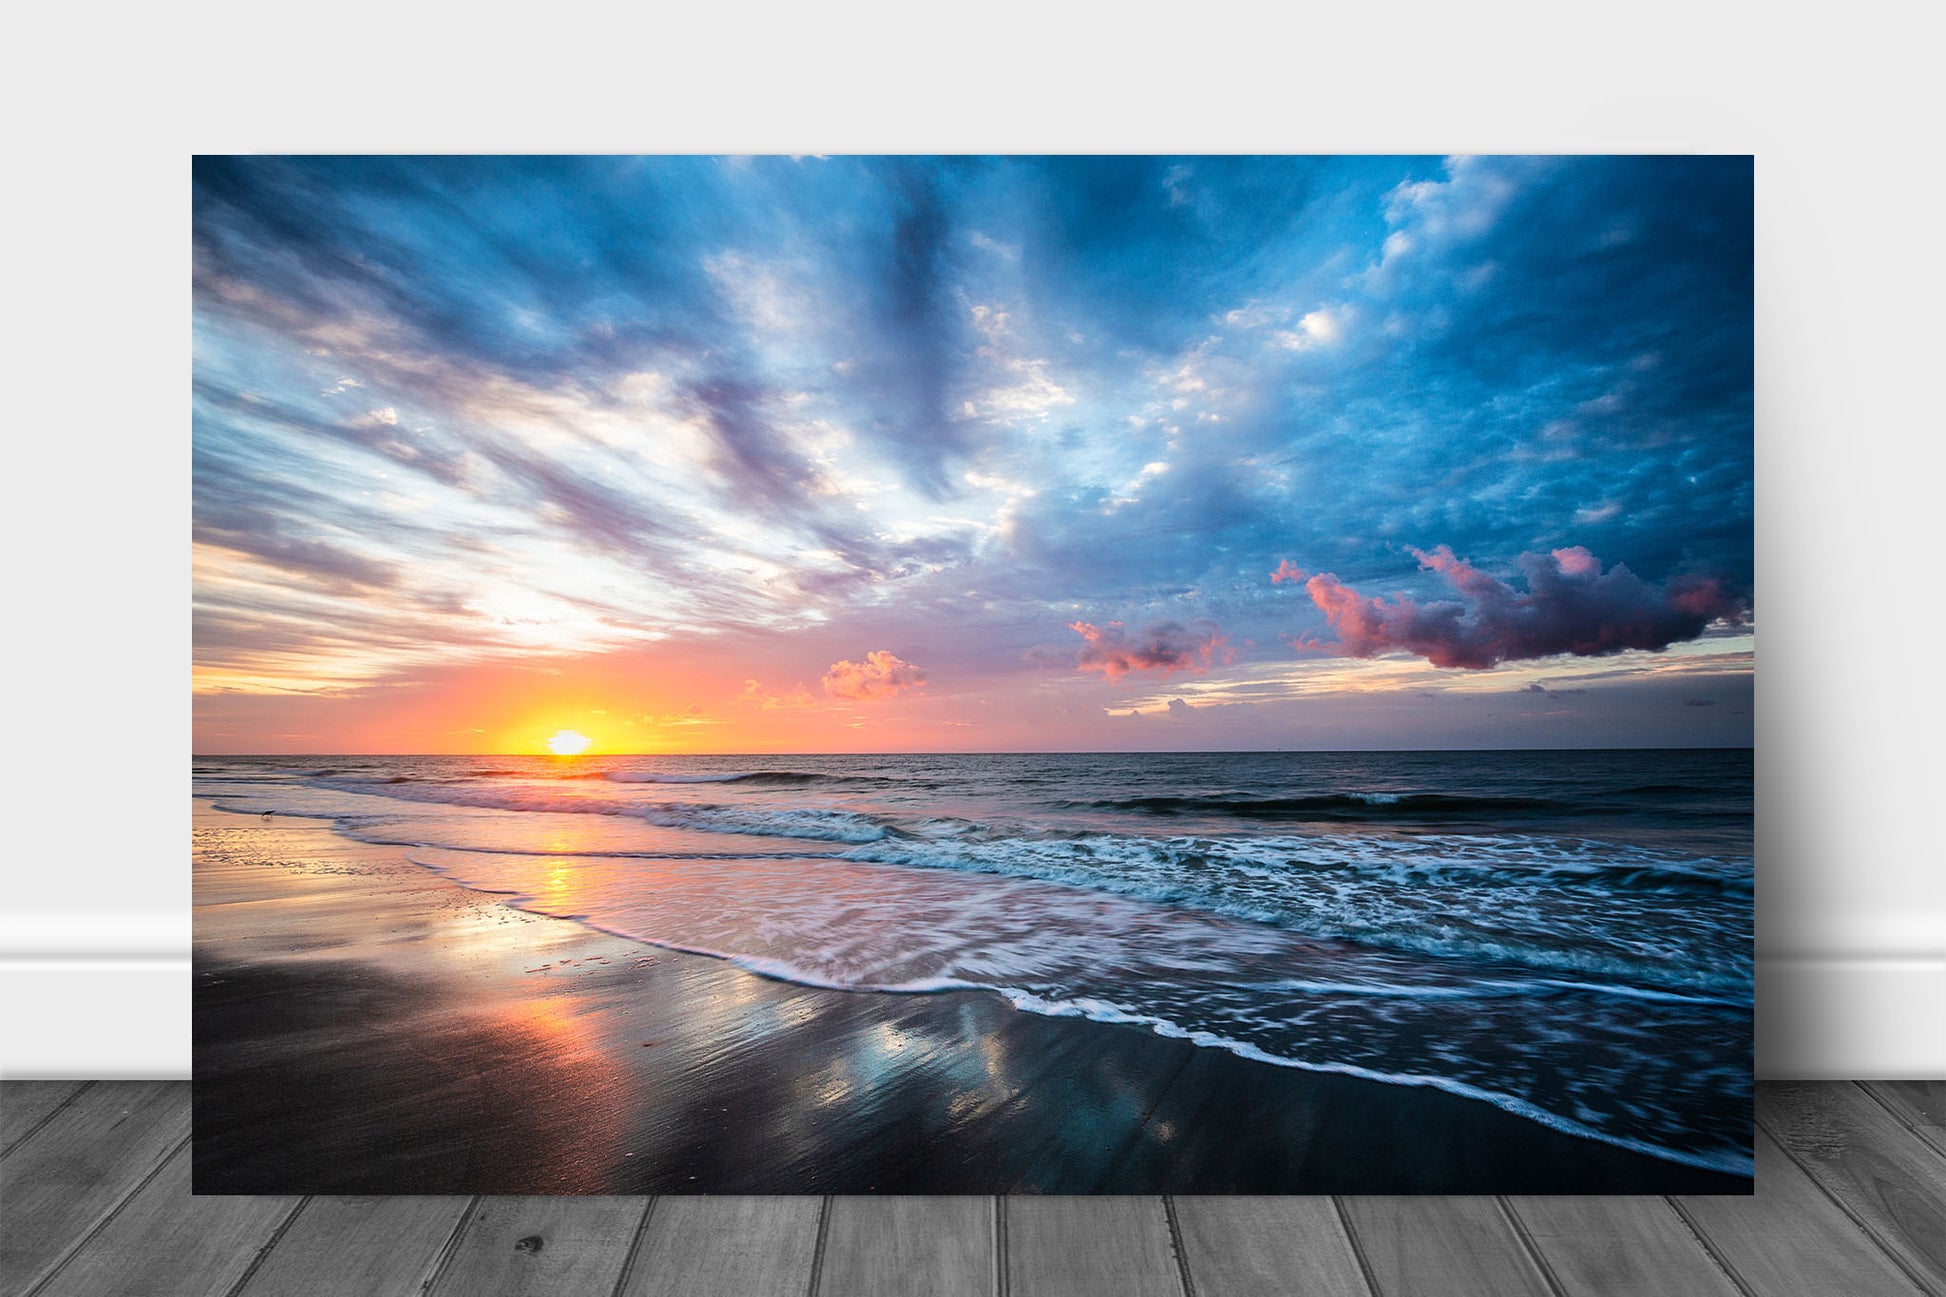 Coastal metal print on aluminum of a scenic sunrise over the Atlantic Ocean along a beach on Hilton Head Island, South Carolina by Sean Ramsey of Southern Plains Photography.